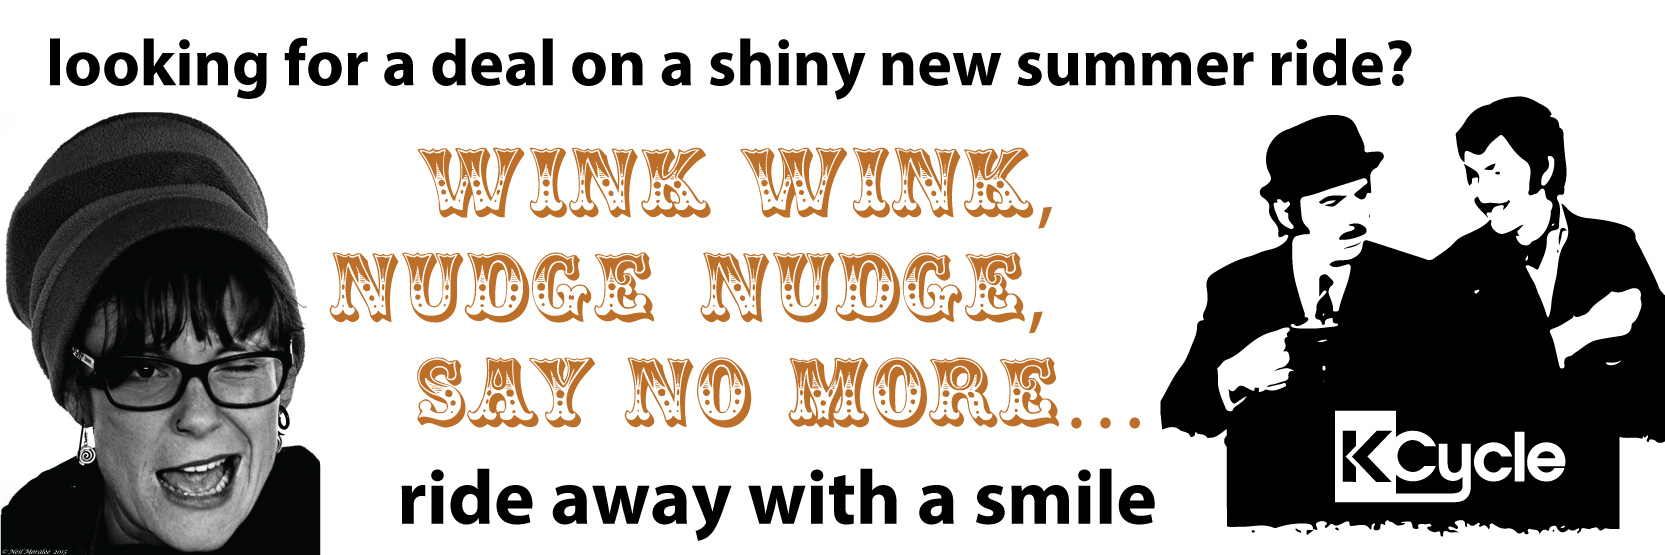 wink wink nudge nudge